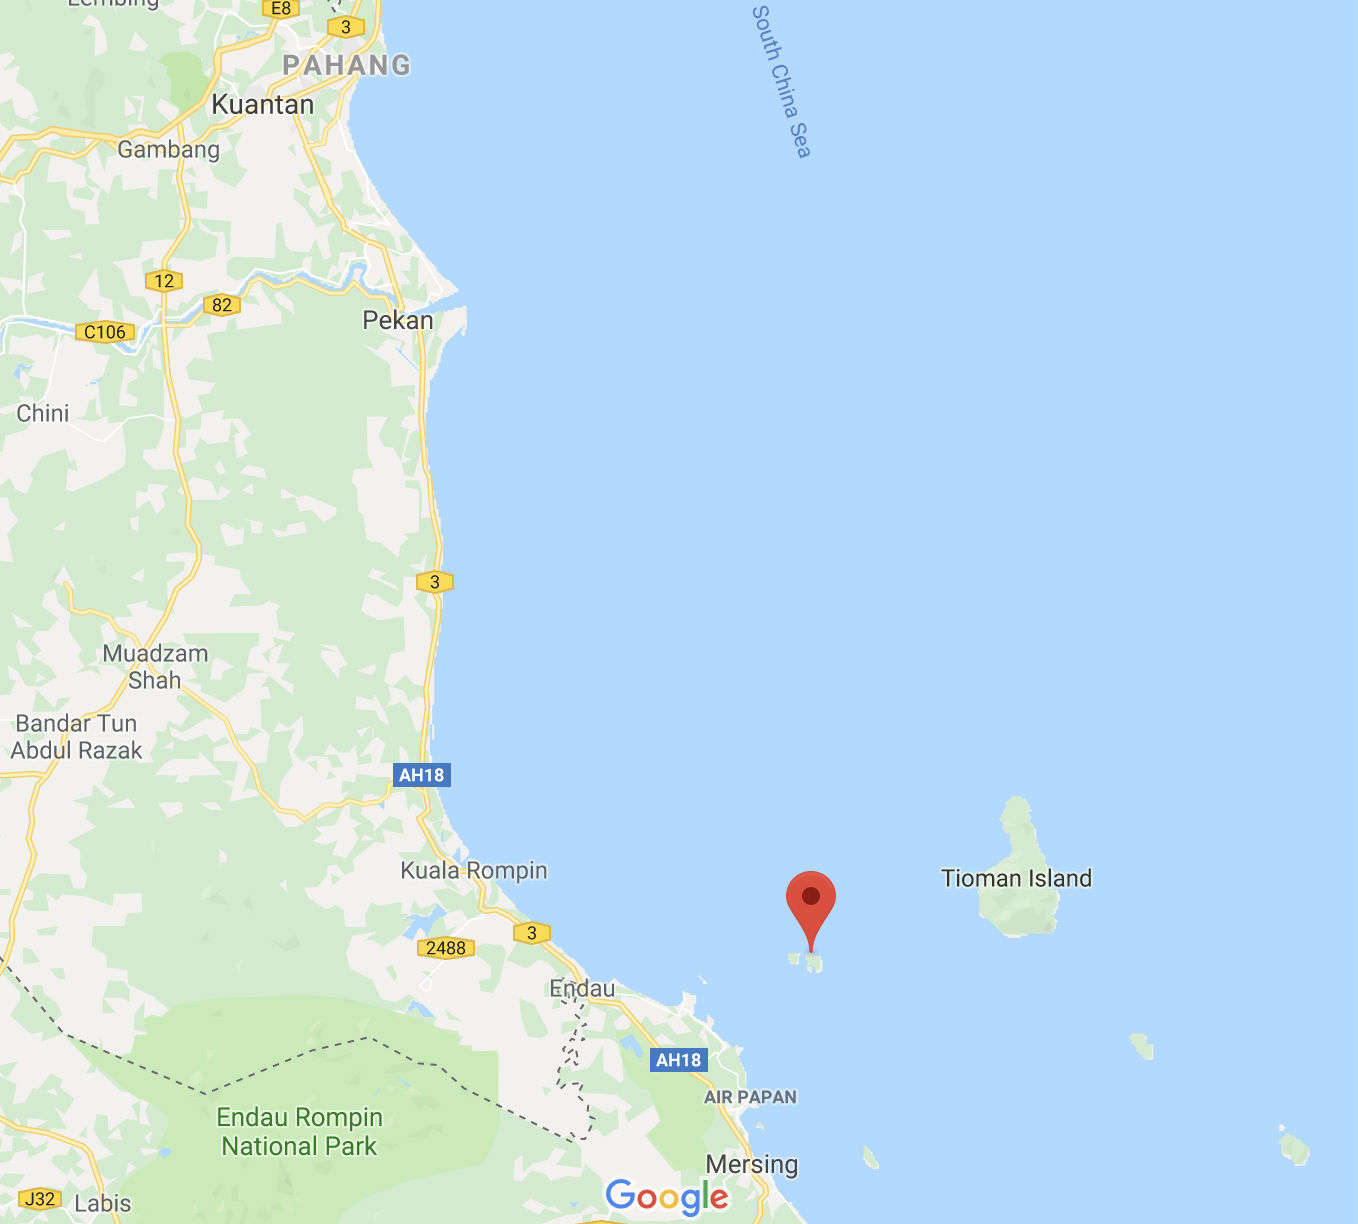 Google Map screenshot showing the location of Endau Islands. 